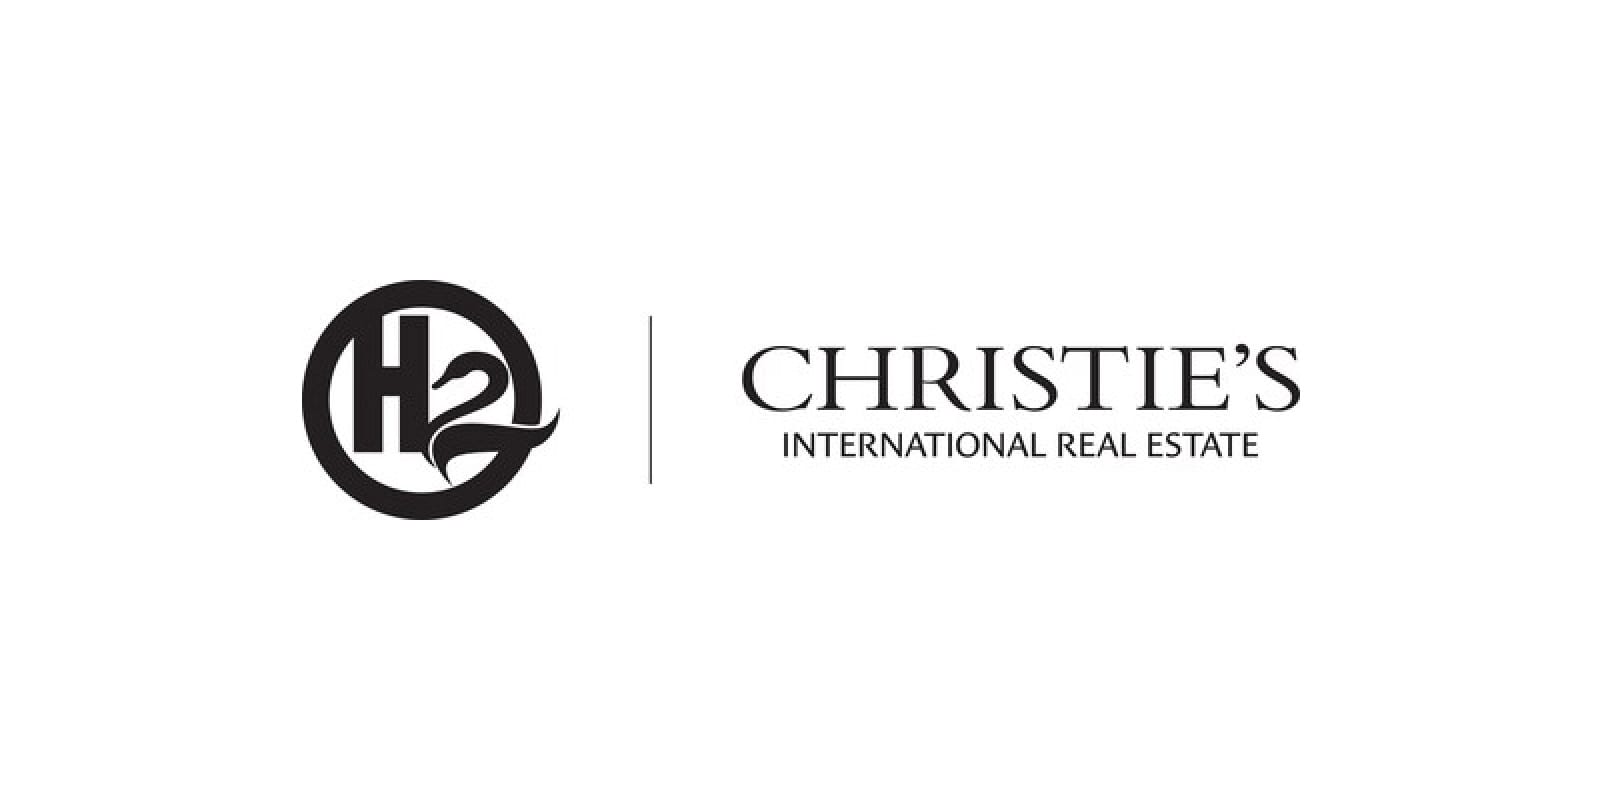 Christie's International Real Estate